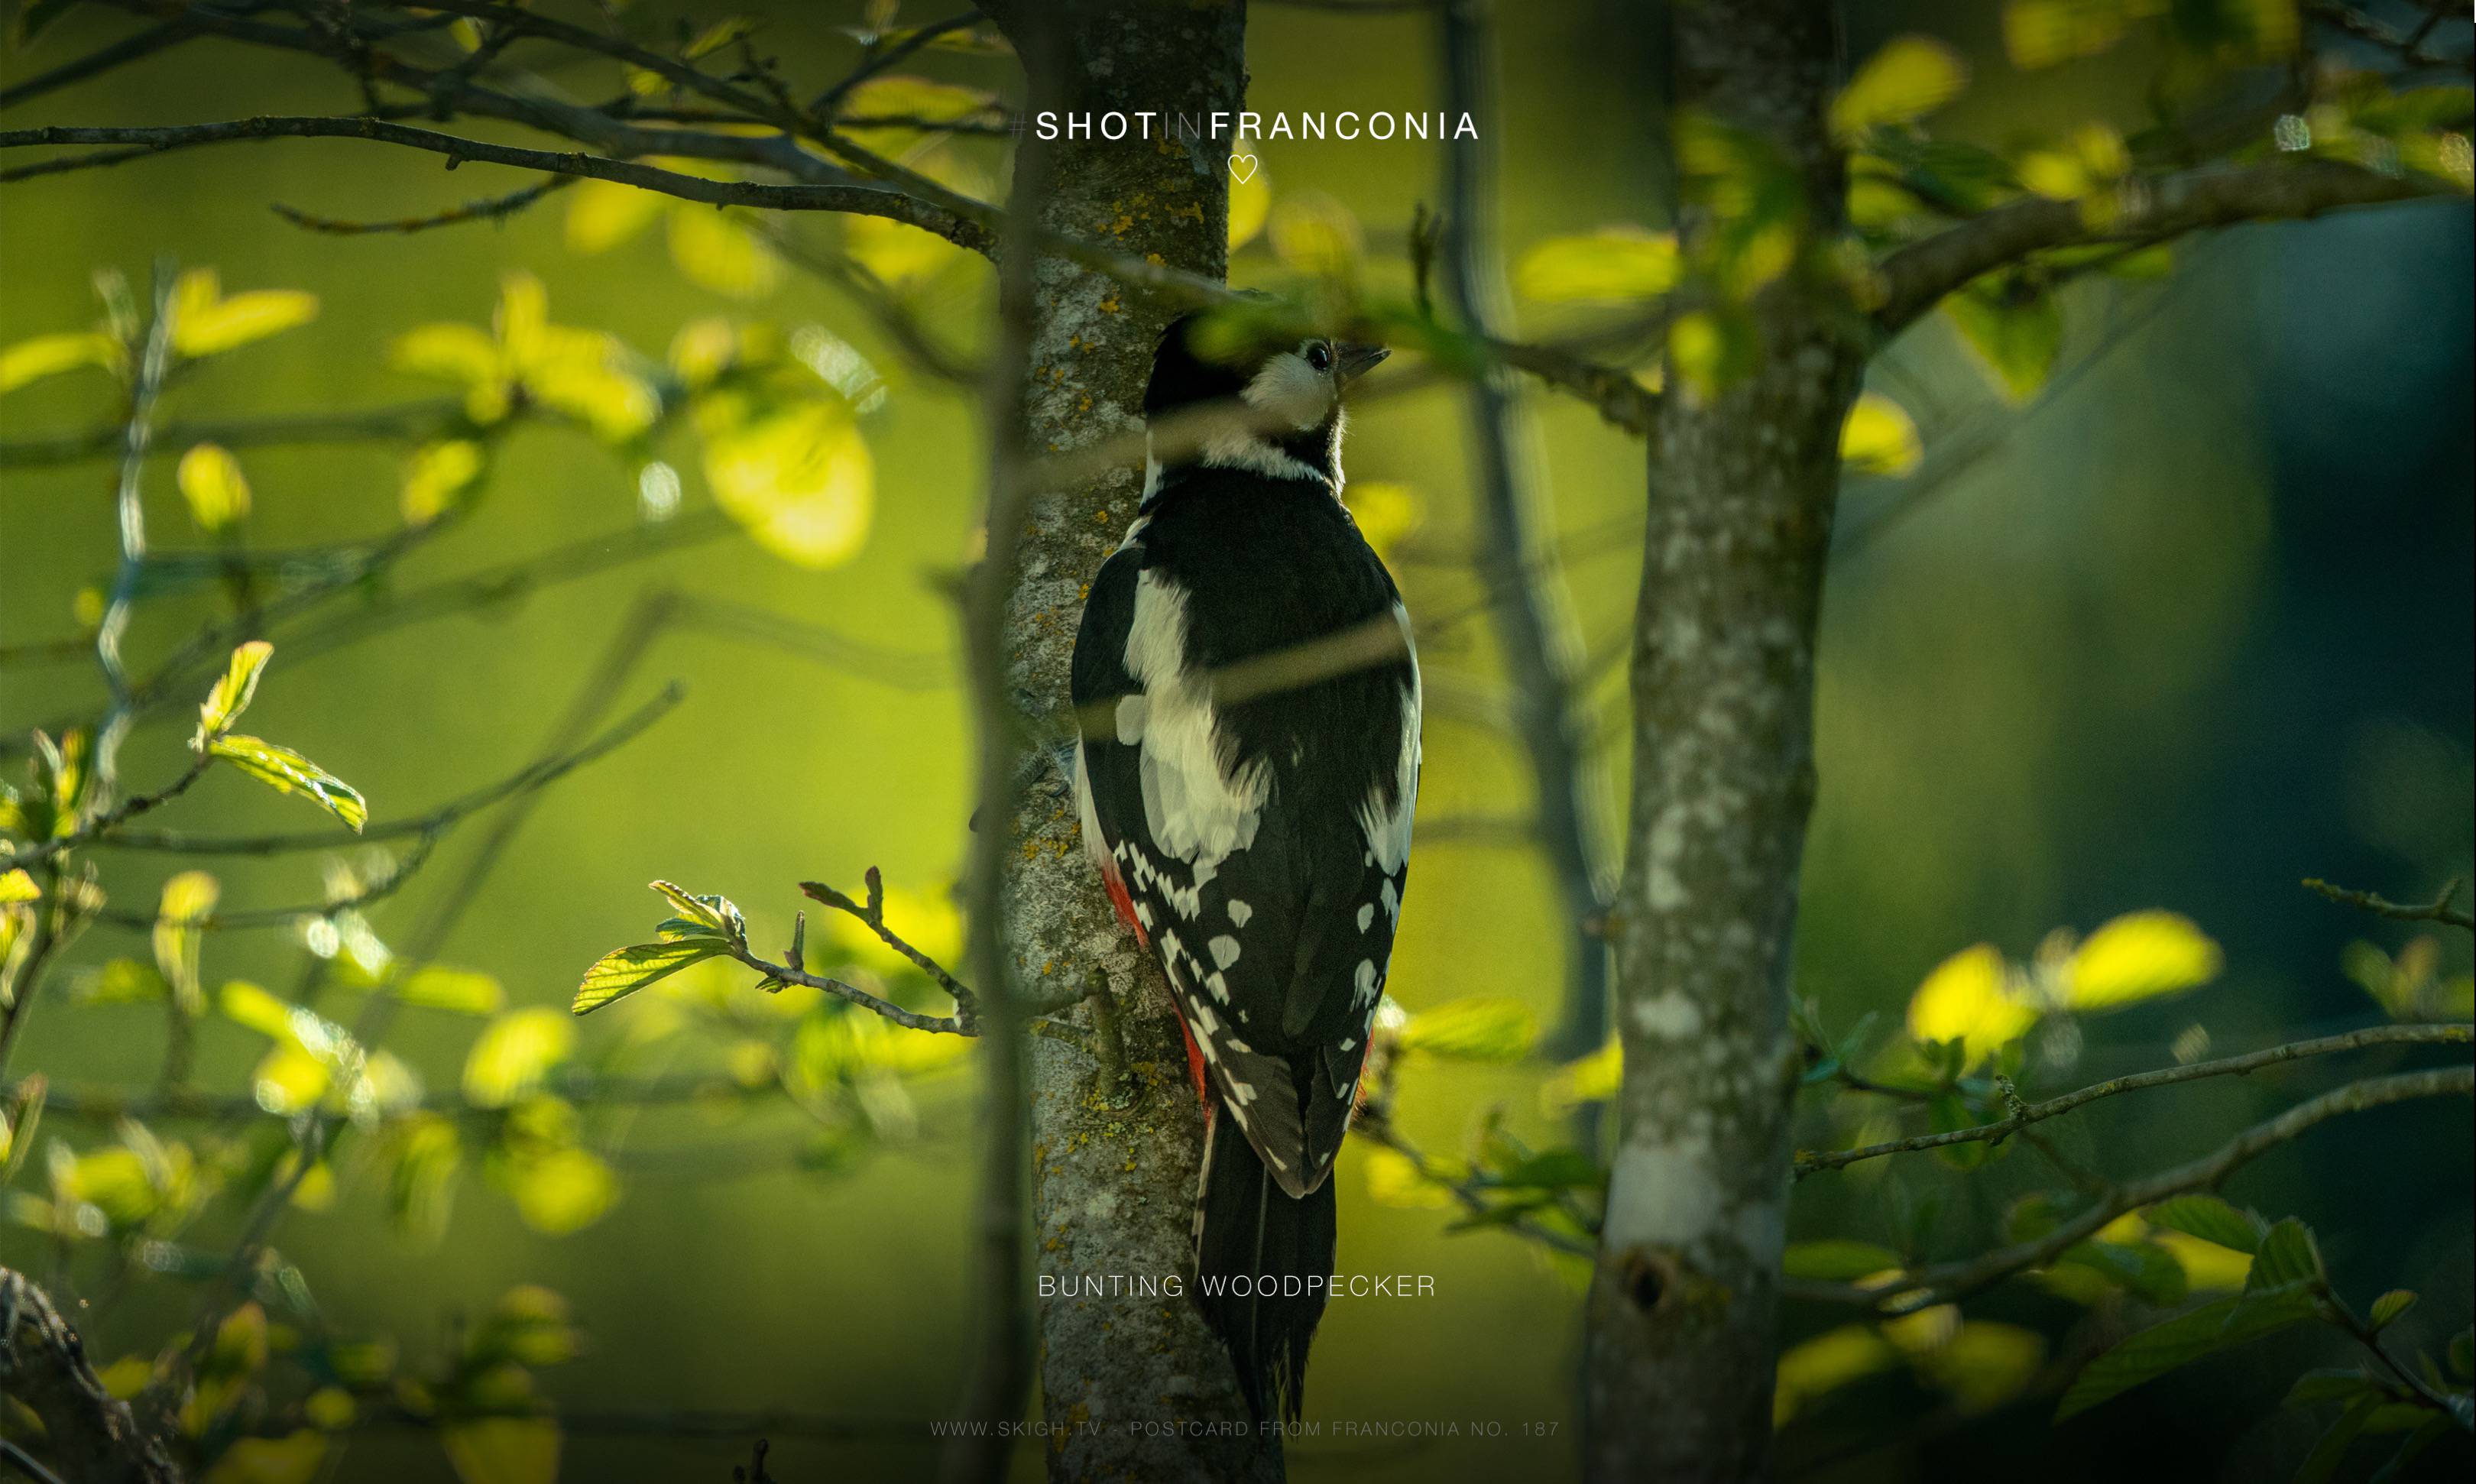 Bunting Woodpecker